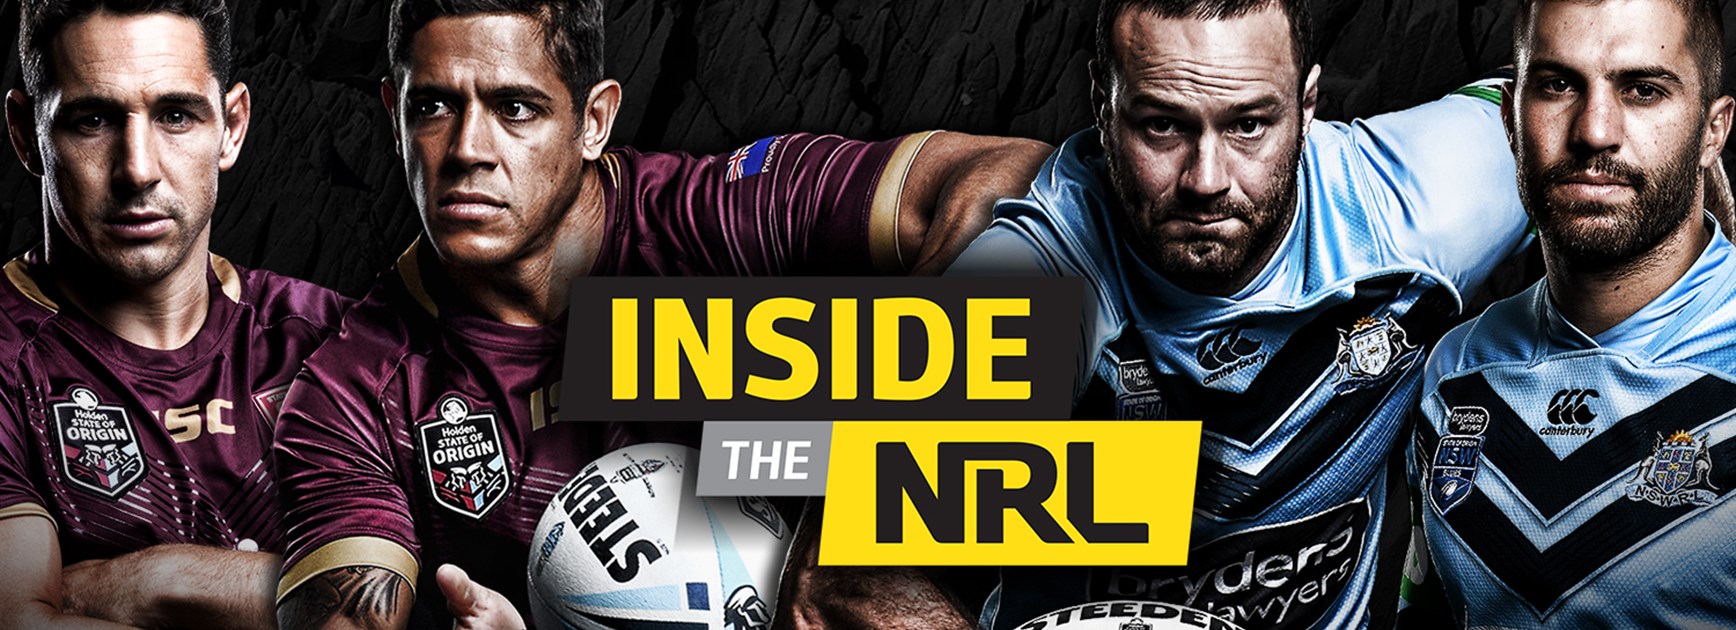 Watch: Inside the NRL